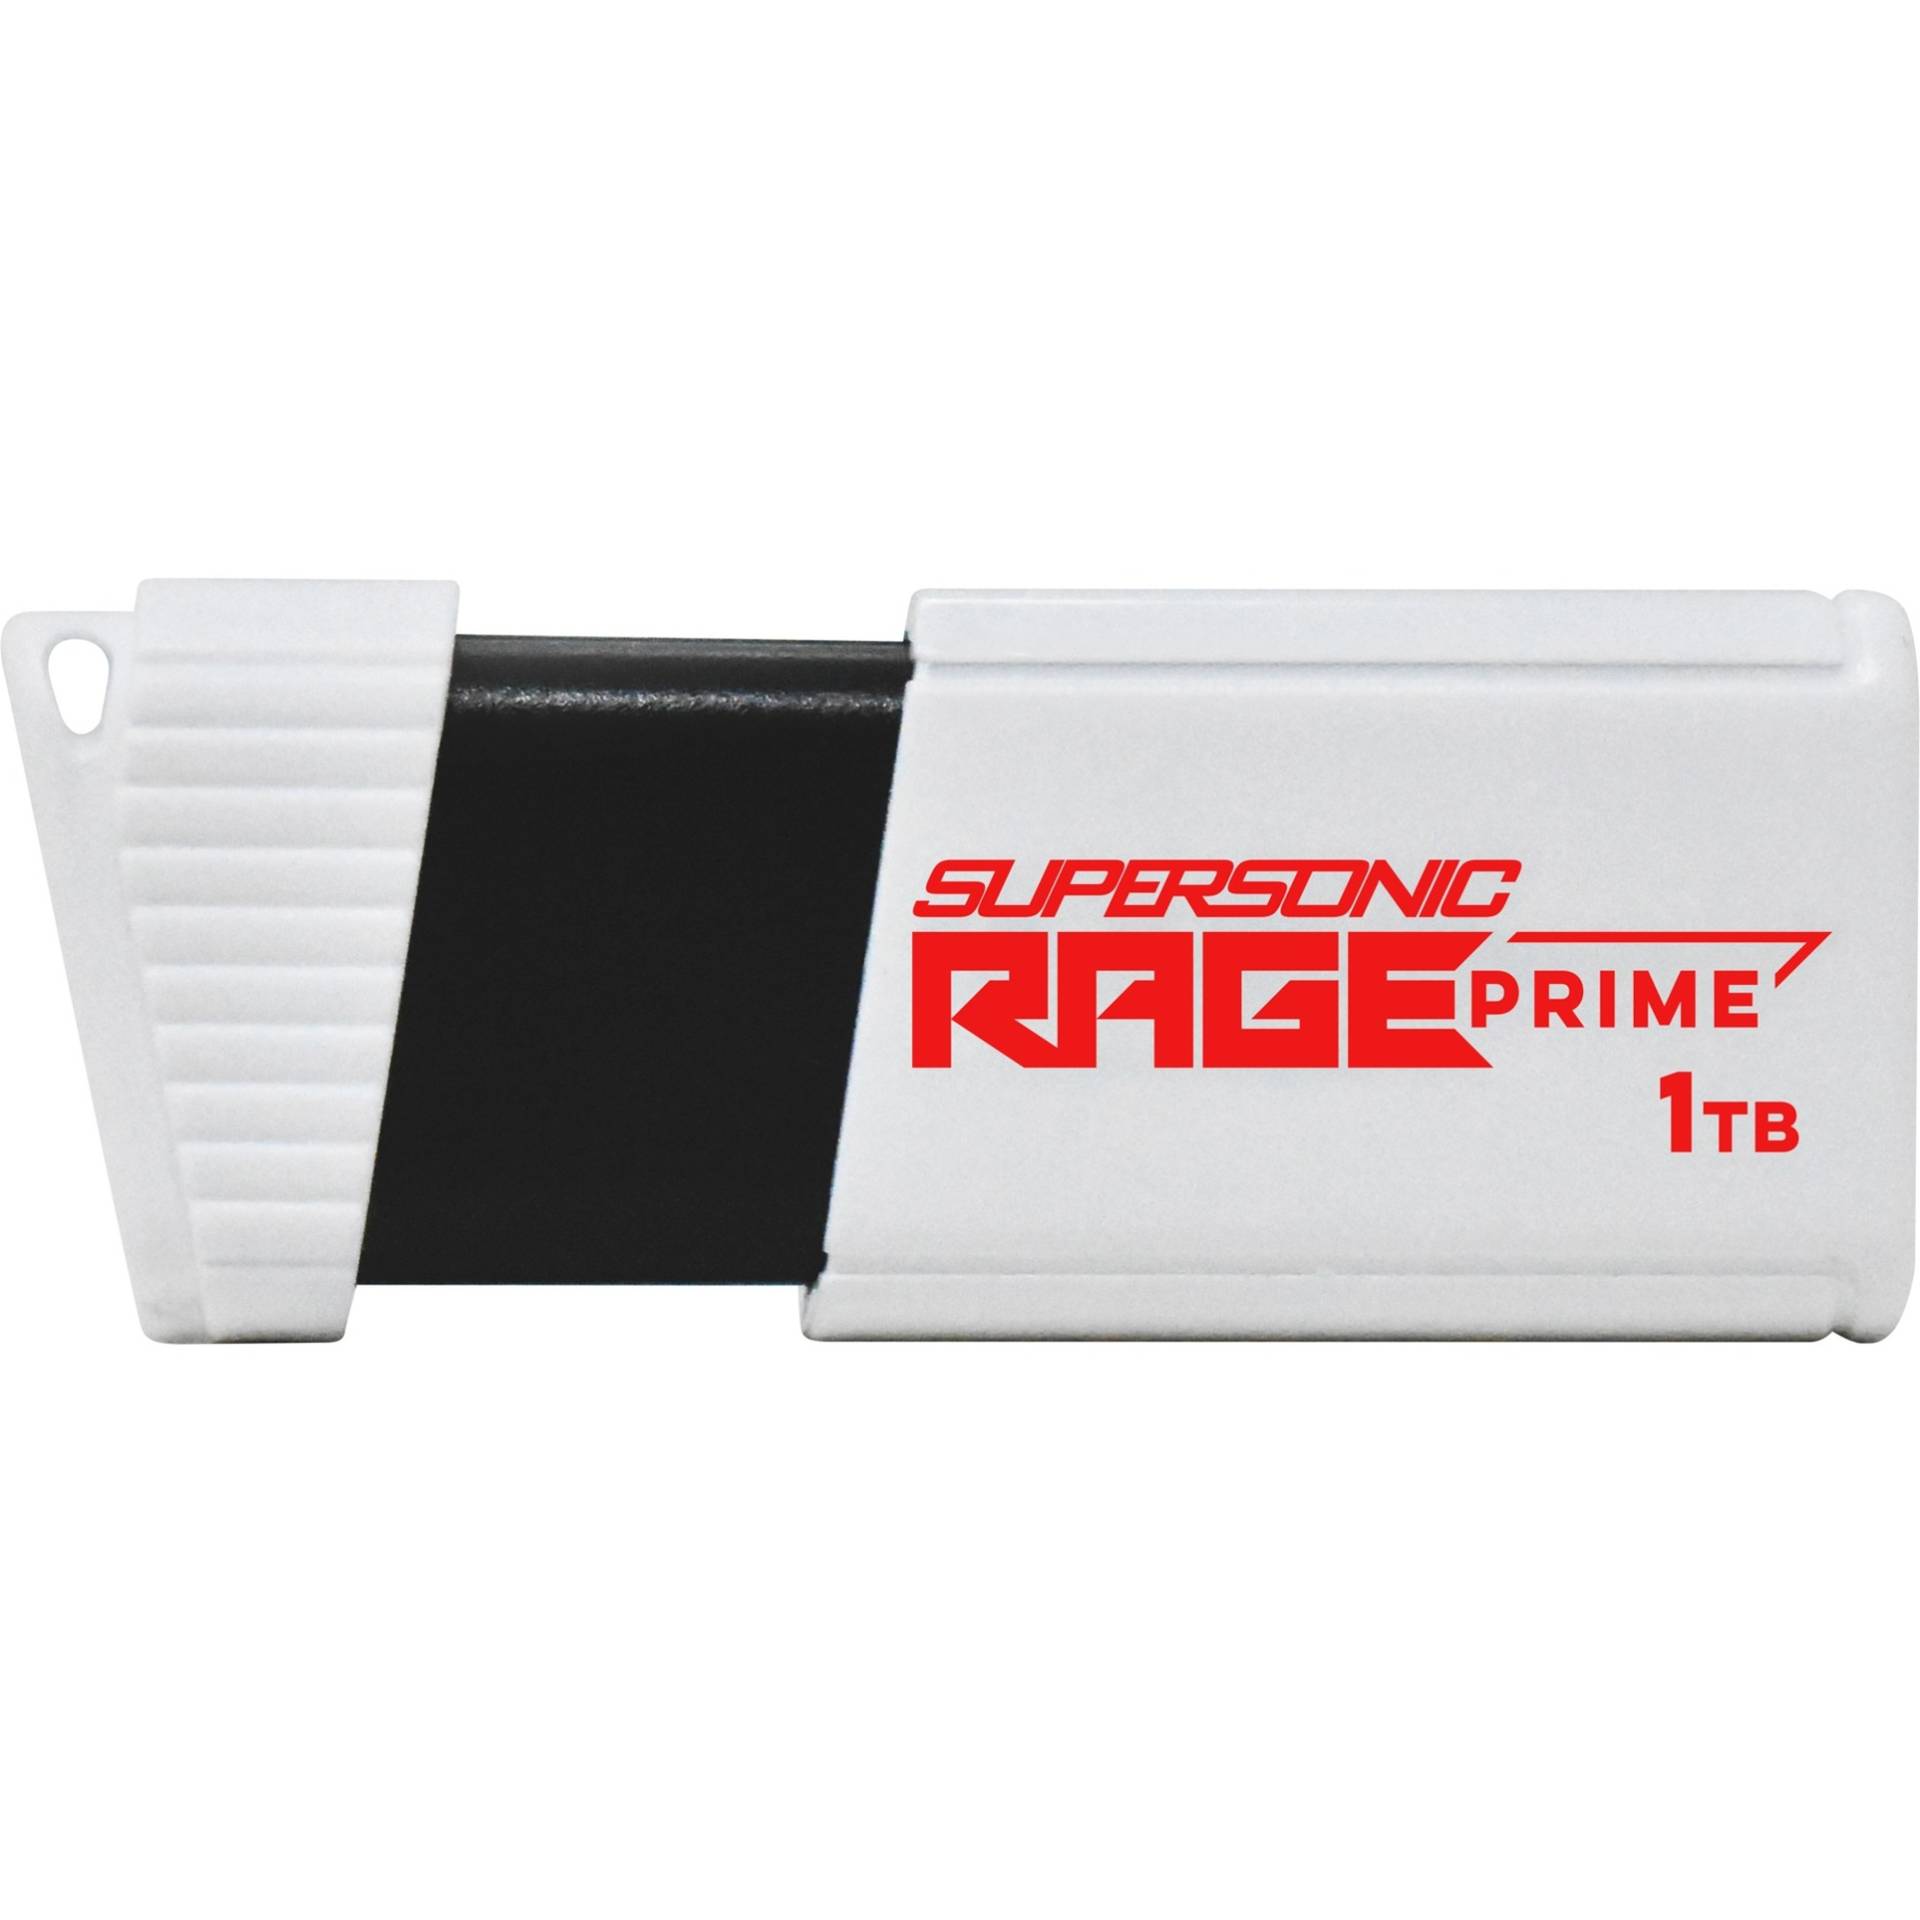 Supersonic Rage Prime 1 TB, USB-Stick von Patriot